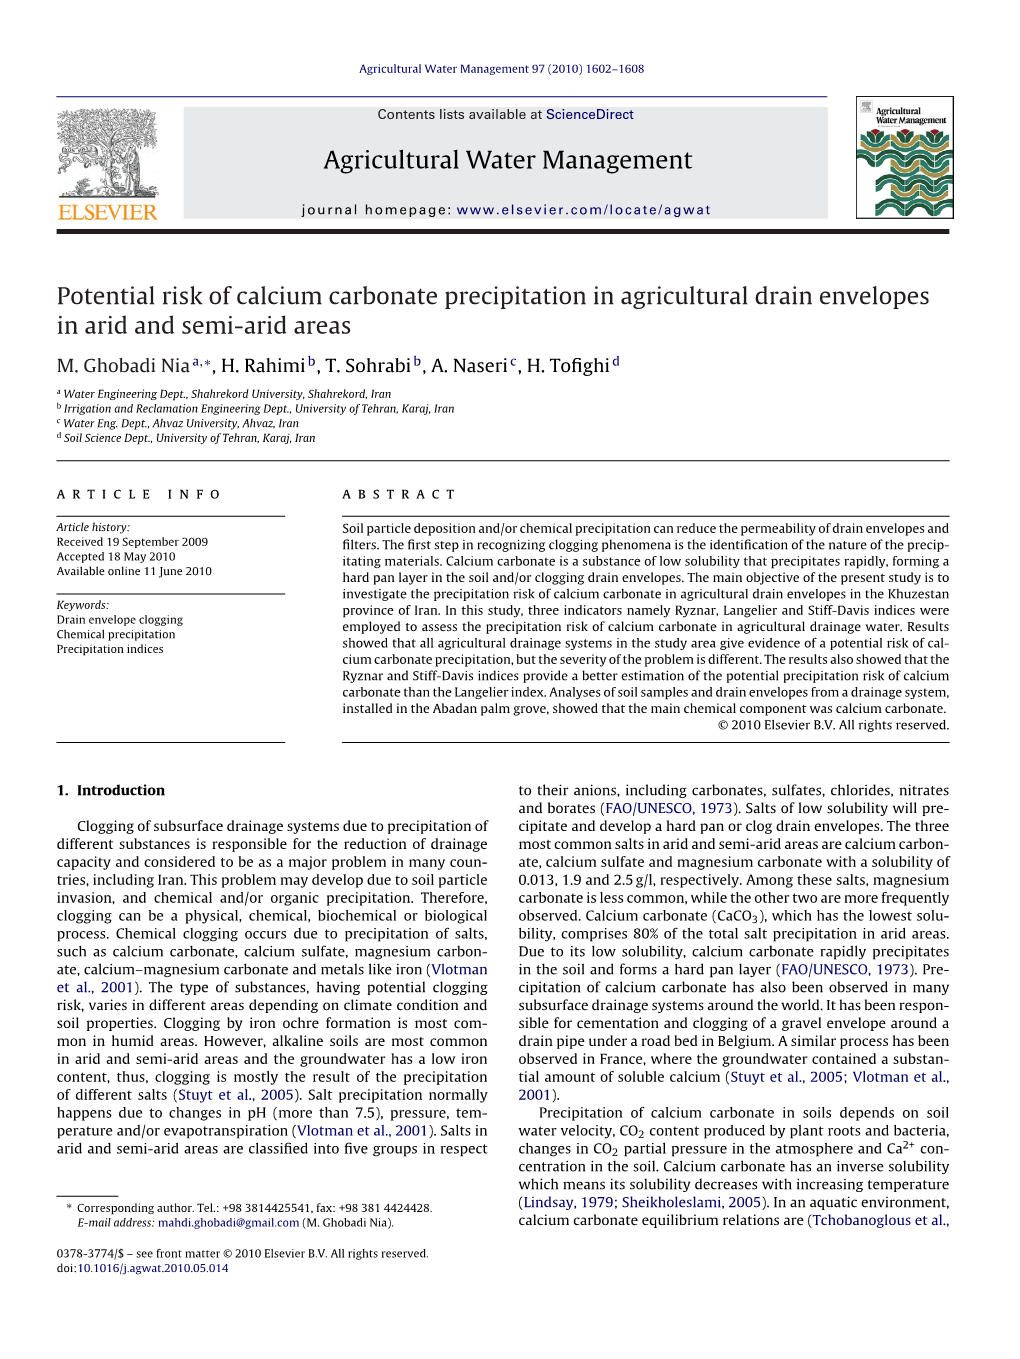 Potential Risk of Calcium Carbonate Precipitation in Agricultural Drain Envelopes in Arid and Semi-Arid Areas